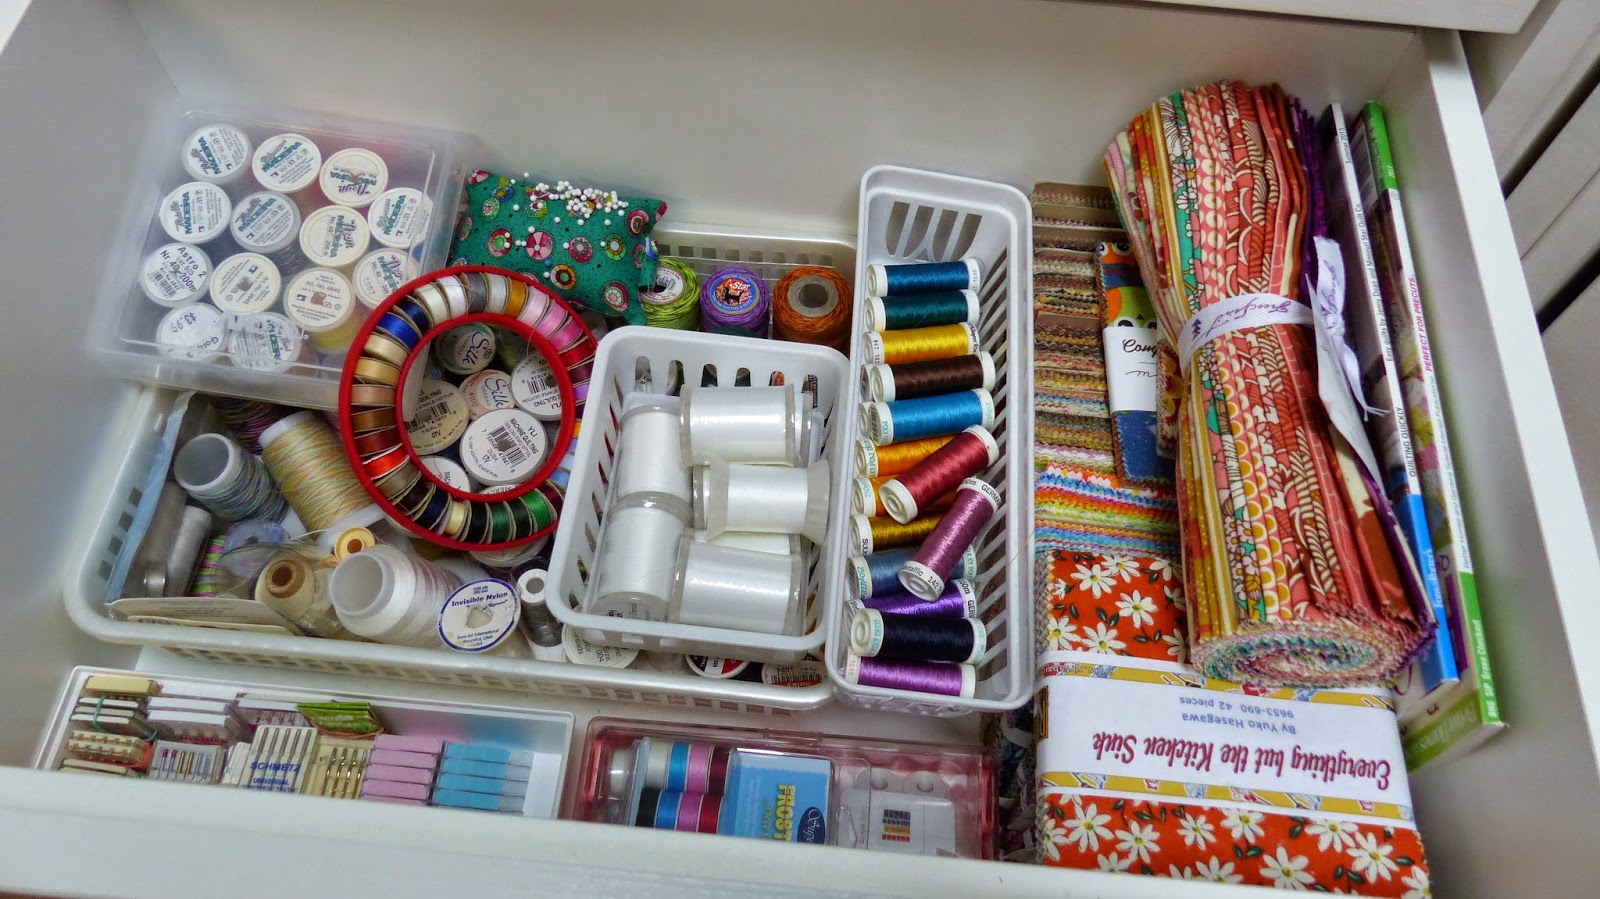 How Do You Organize Miscellaneous Threads?